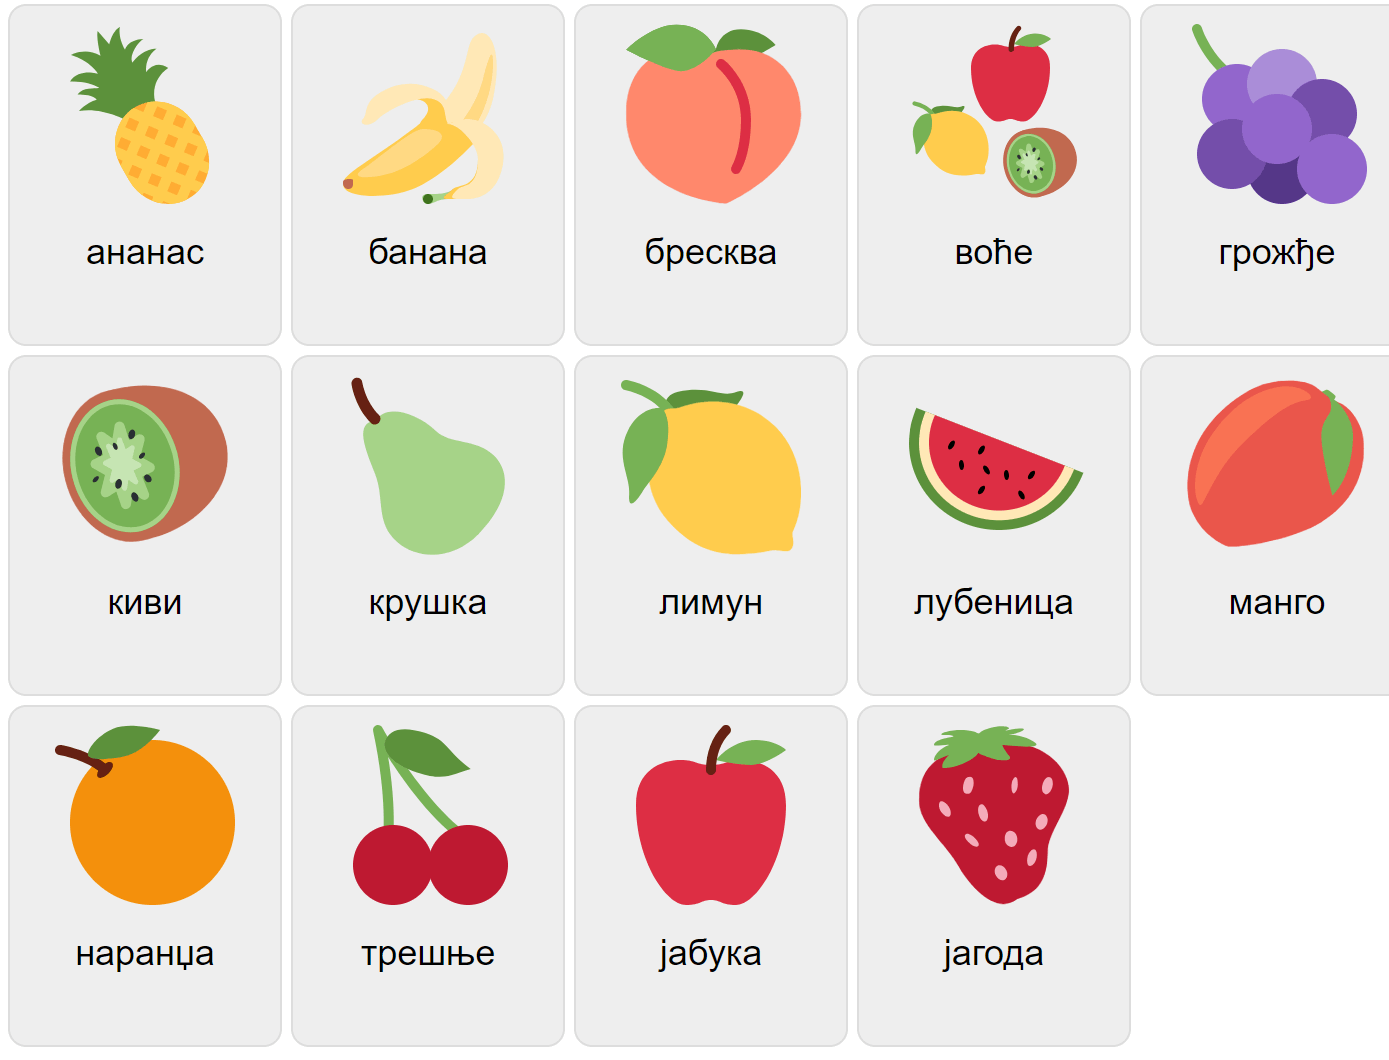 Fruits in Serbian